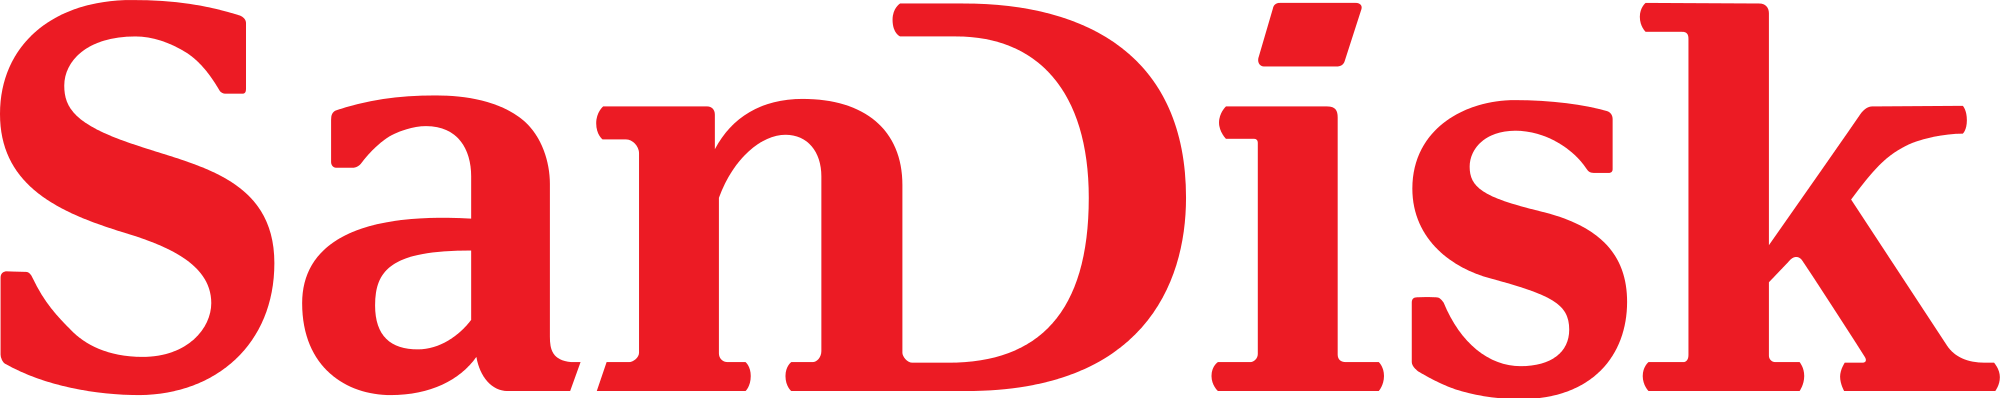 SanDisk SDDDC2-064G, Ultra Dual Drive Usb Type-C